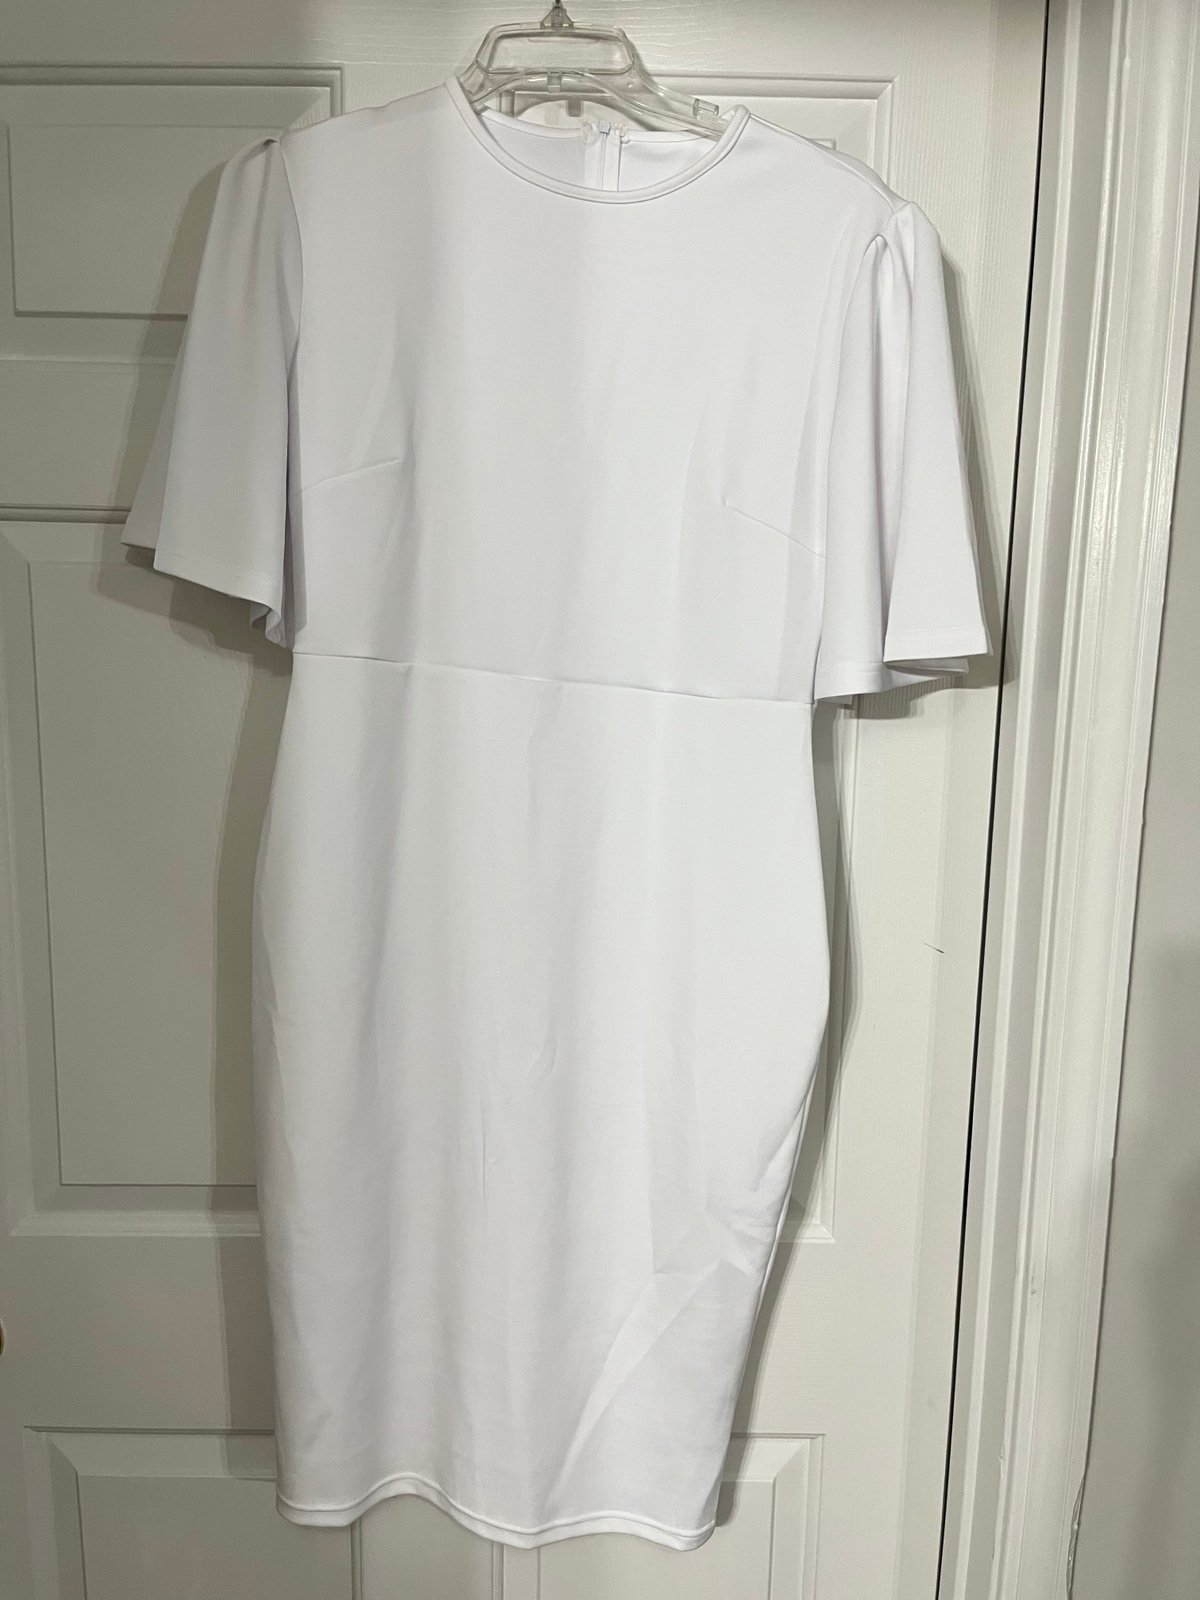 Discounted White ruffled flared short sleeves dress size XXL o1xmQG4kQ best sale